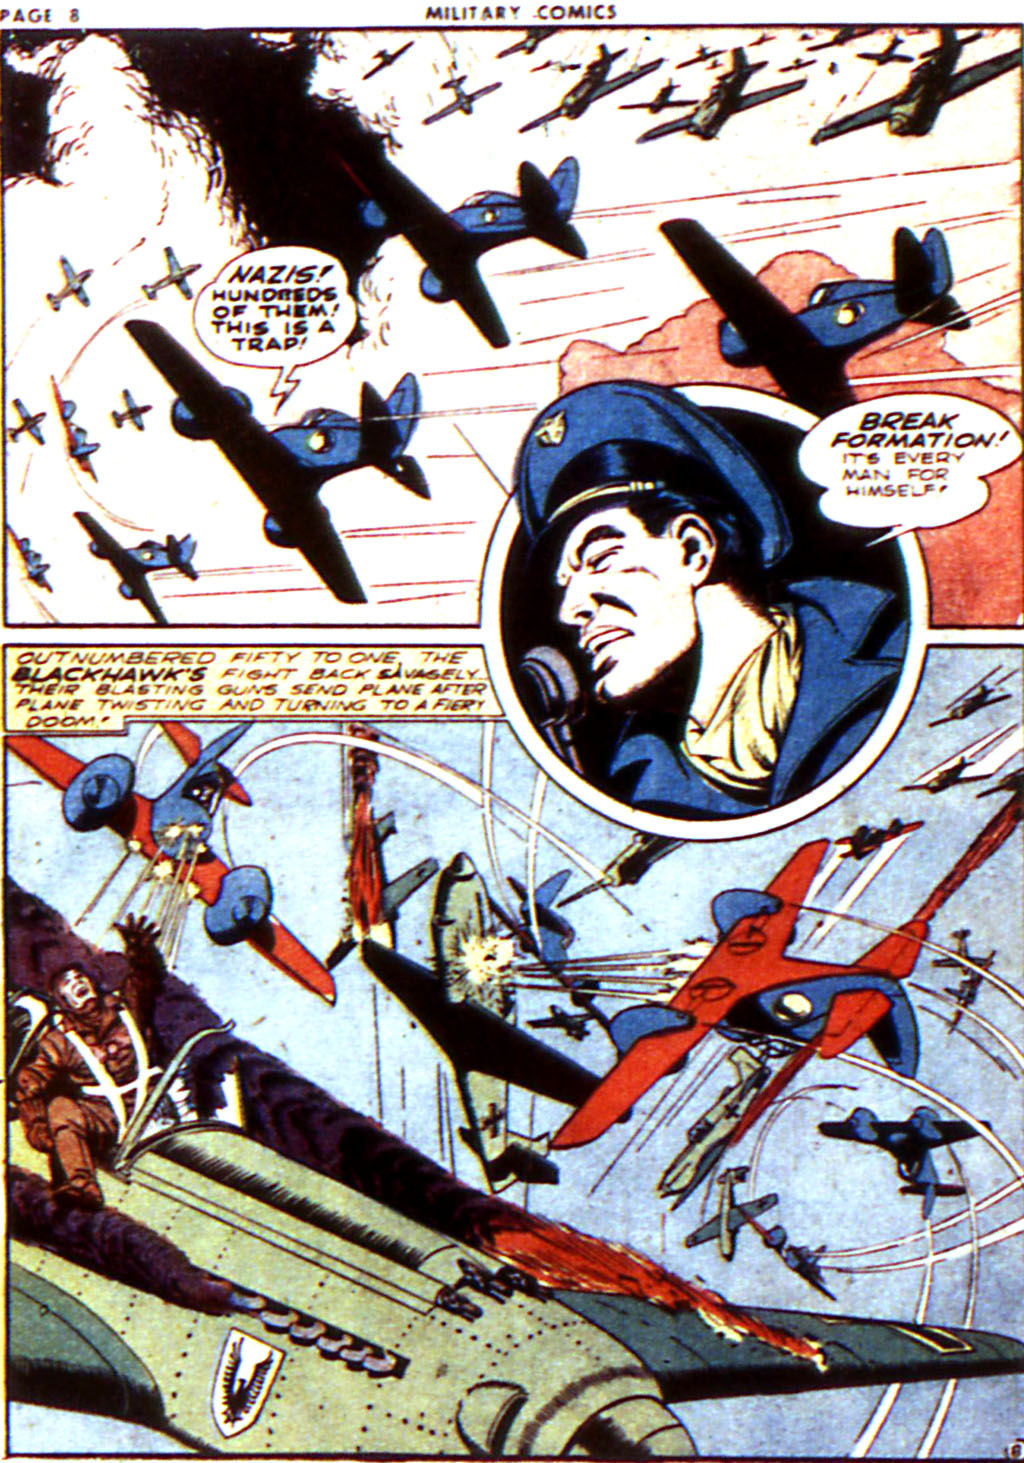 Read online Military Comics comic -  Issue #14 - 10